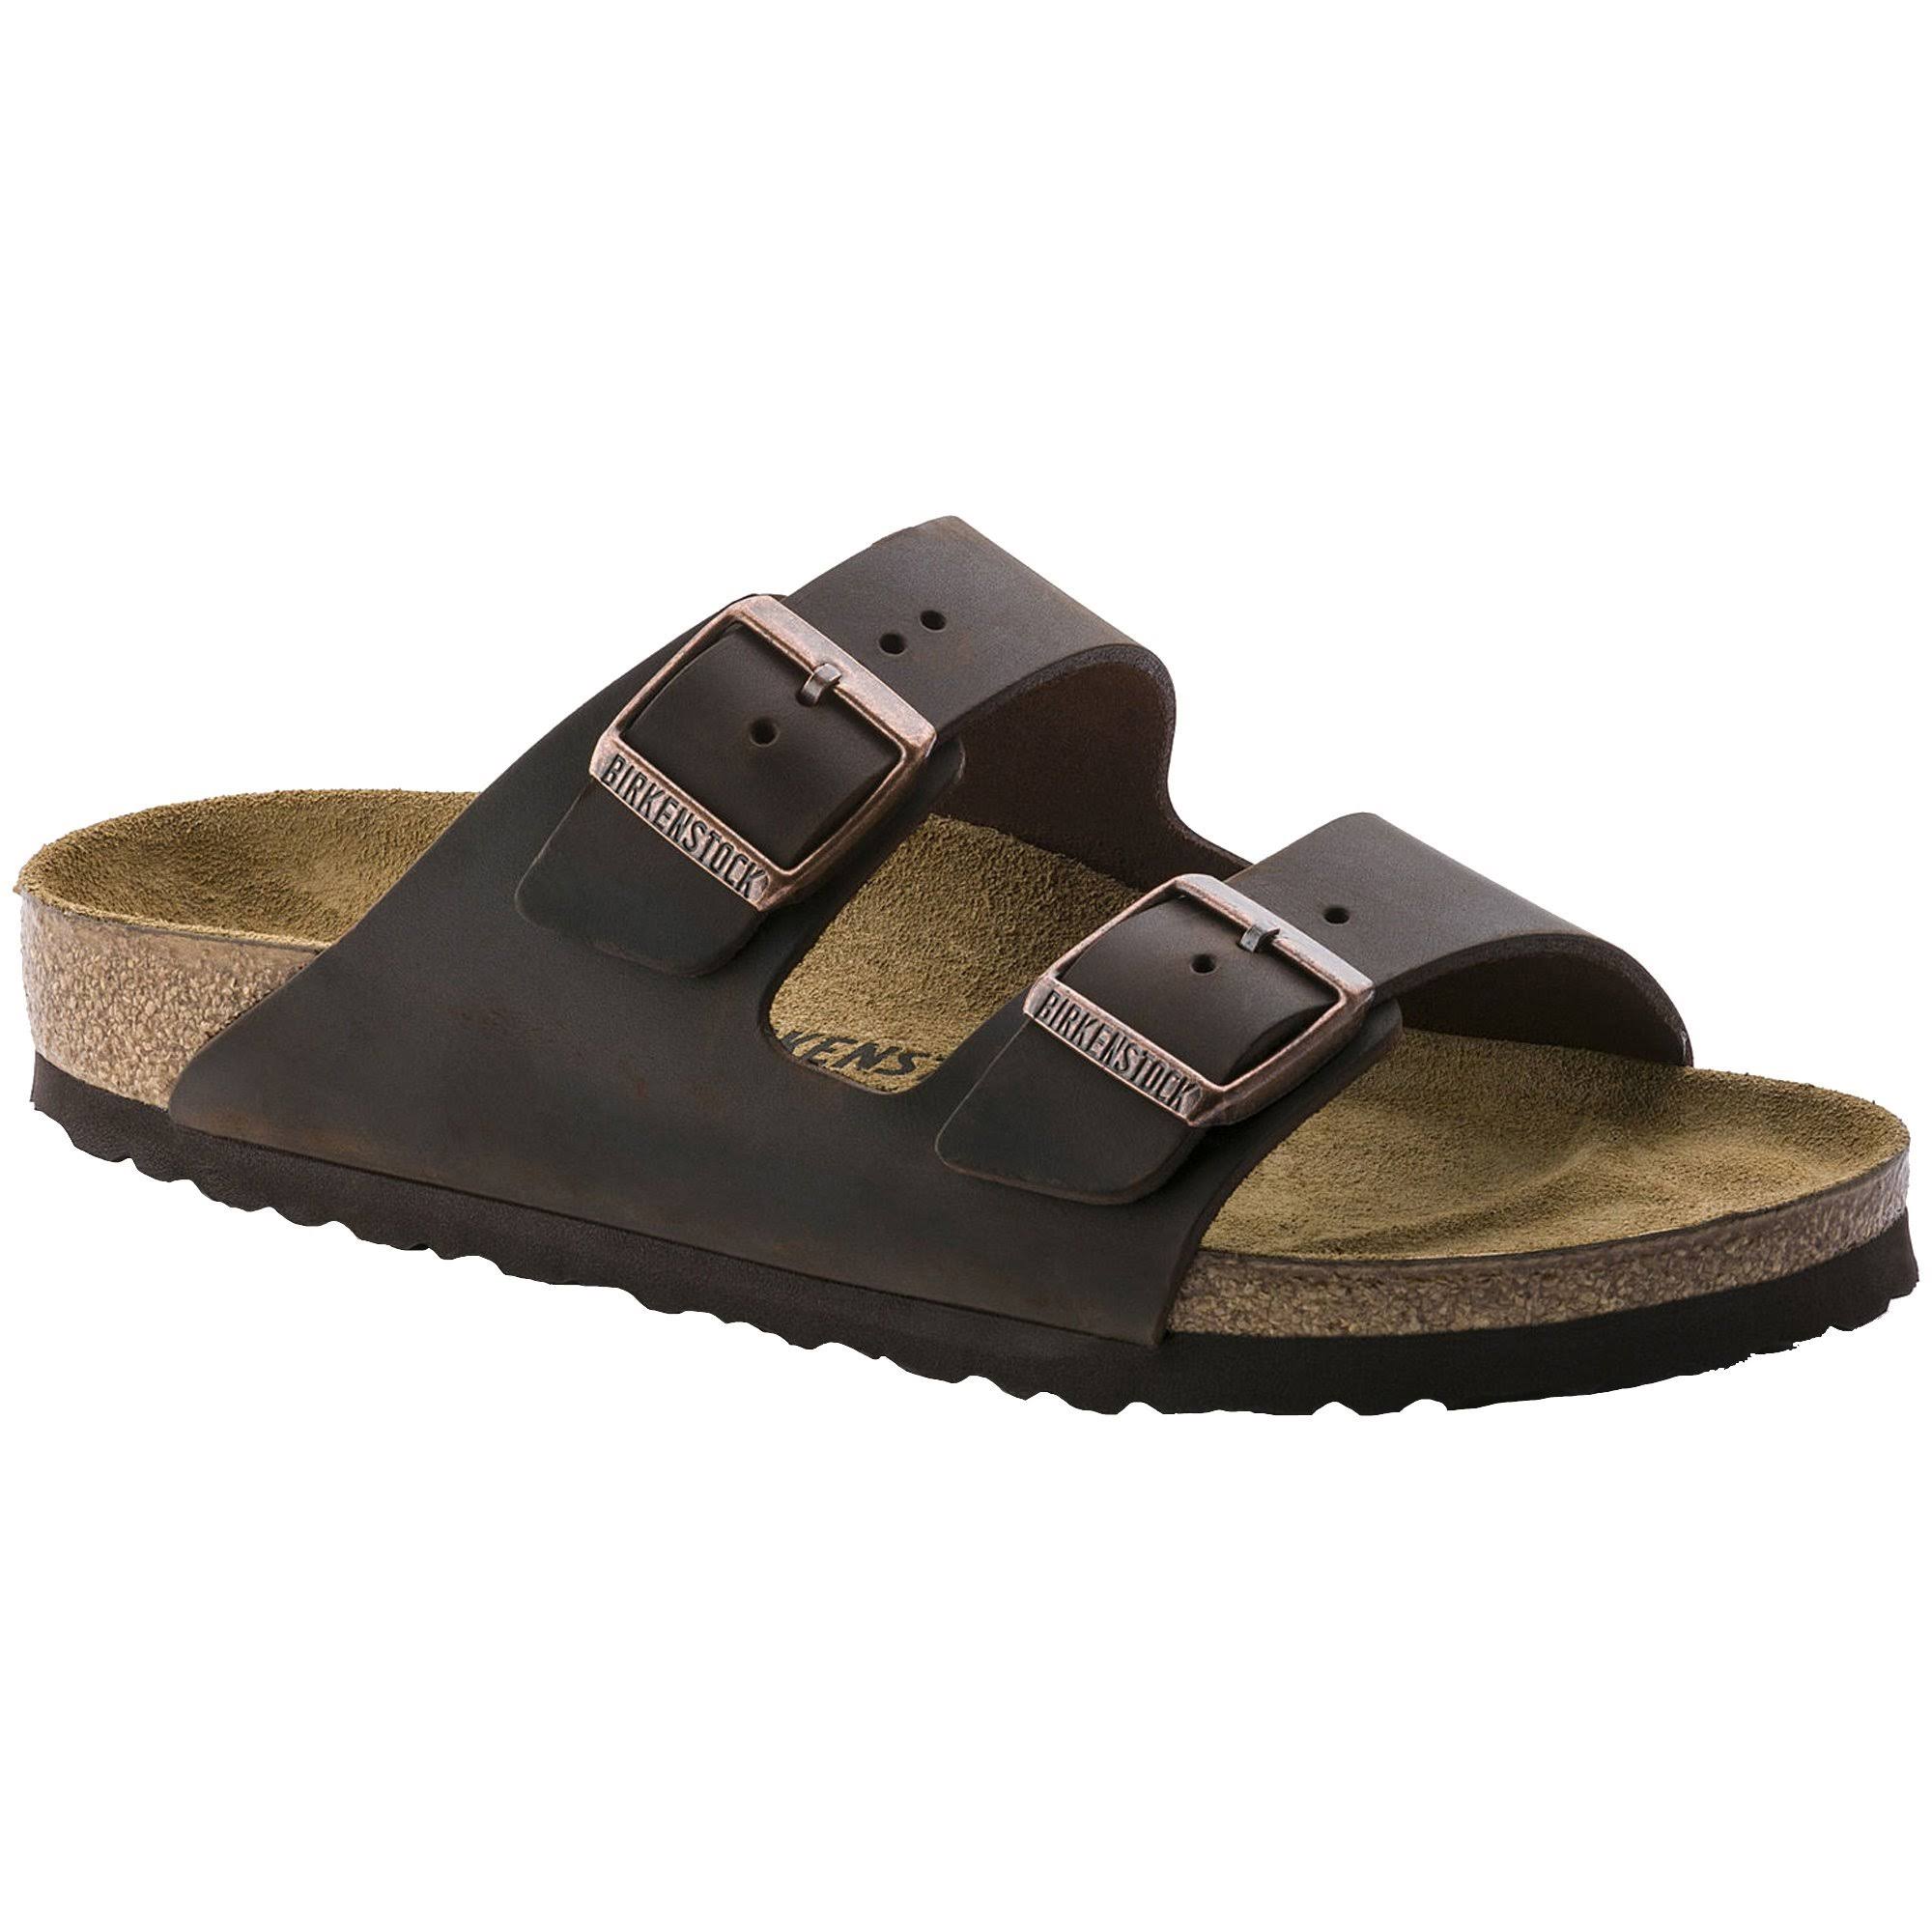 Birkenstock Arizona Soft Footbed Sandals - Habana Oiled Leather, Size 6 US